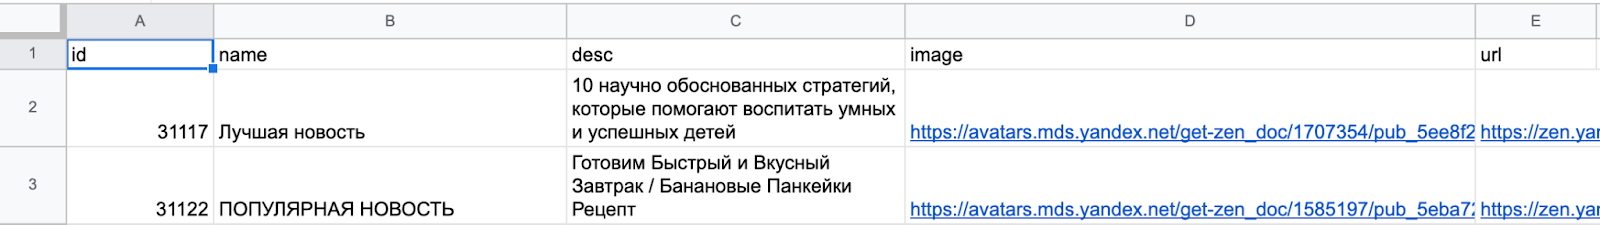 Пример оформления листа в сервисе Google Sheets